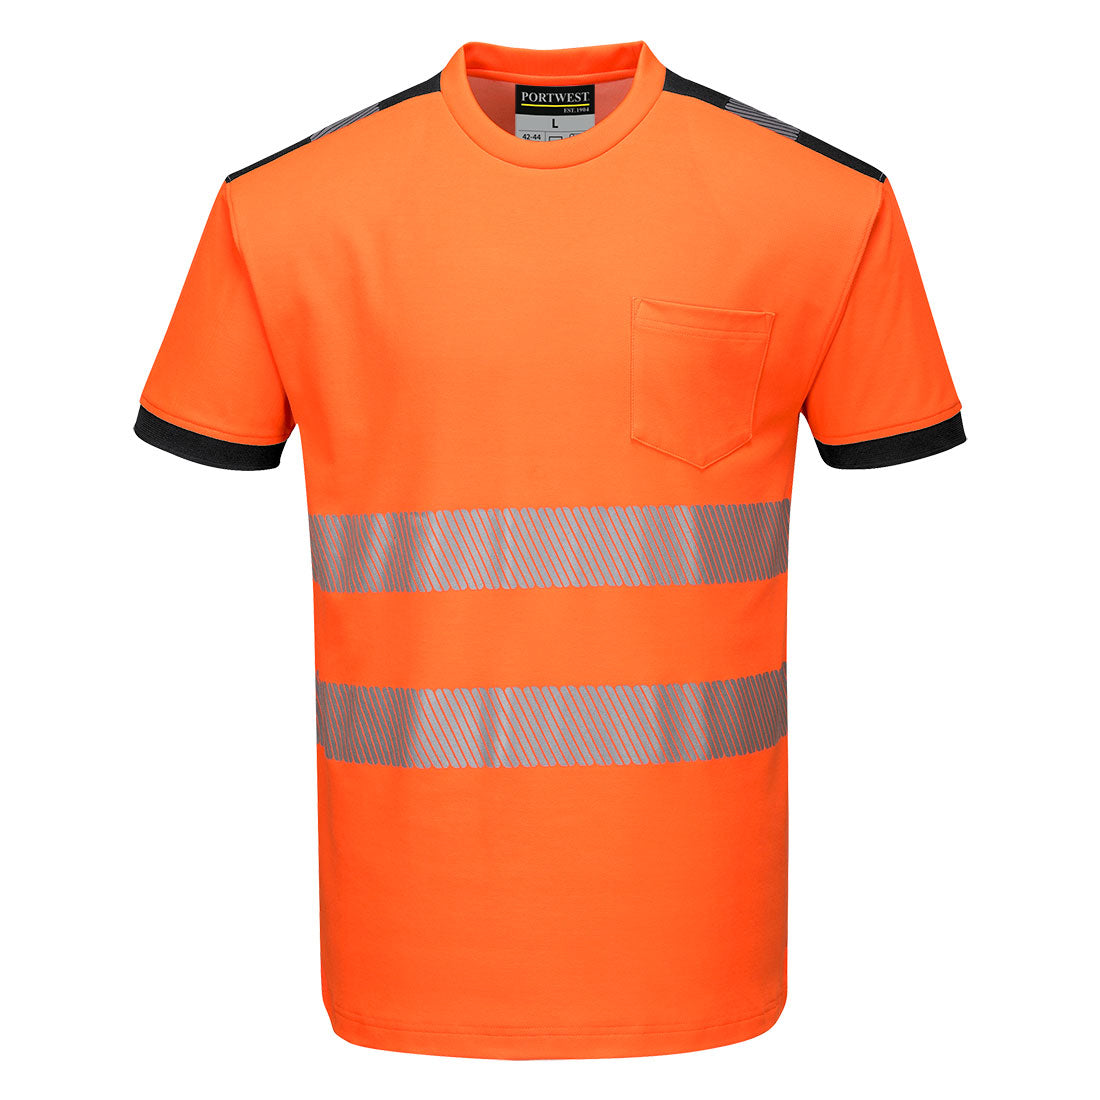 Portwest T181 - Orange/Black Sz S PW3 Hi-Vis Short Sleeved T-Shirt Viz Visibilty